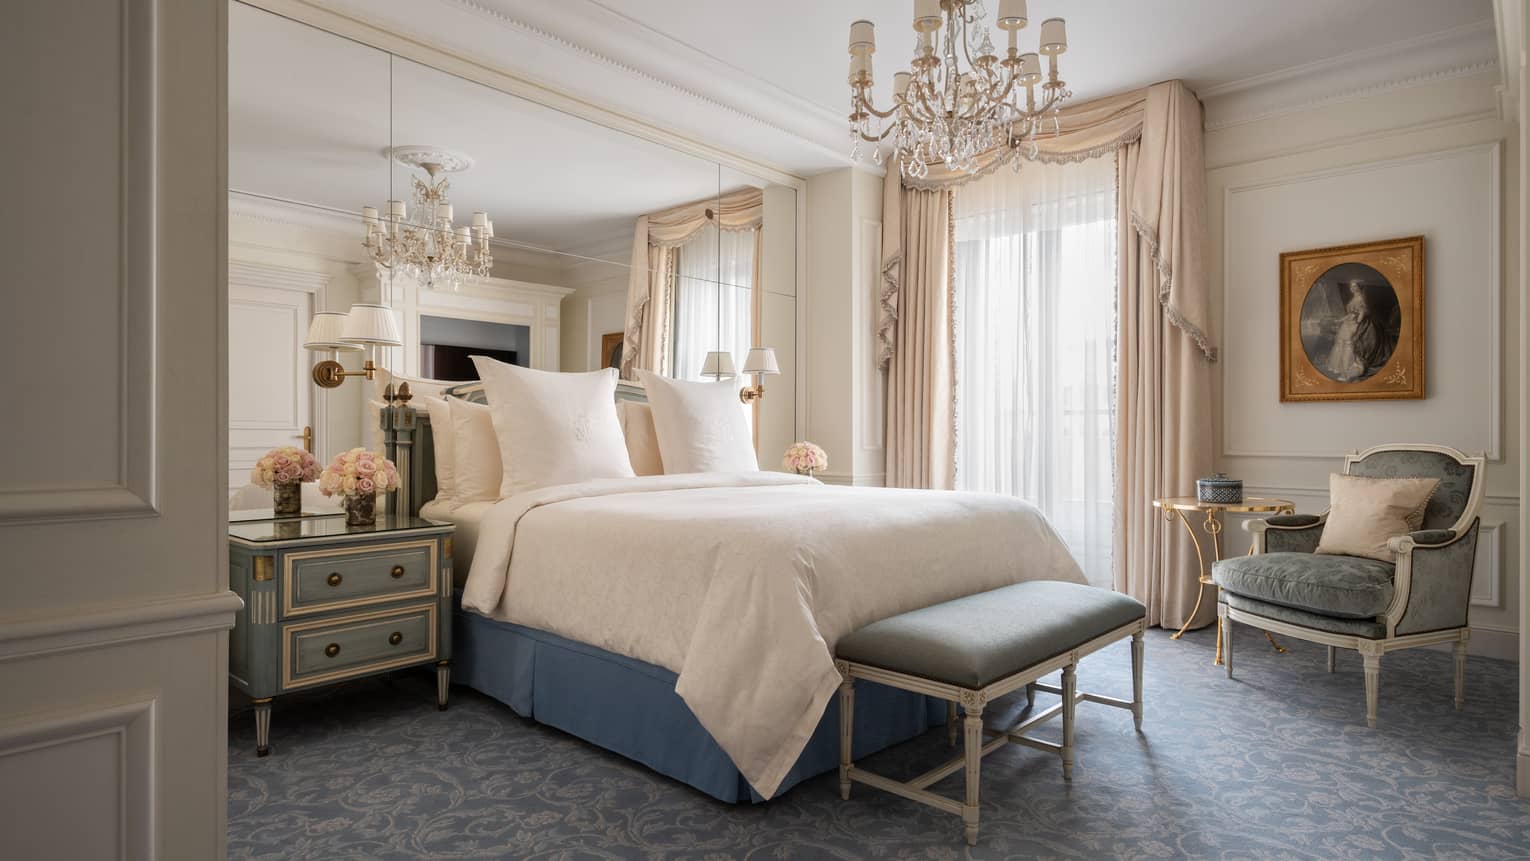 Deluxe Suite bed, elegant furniture under small chandelier